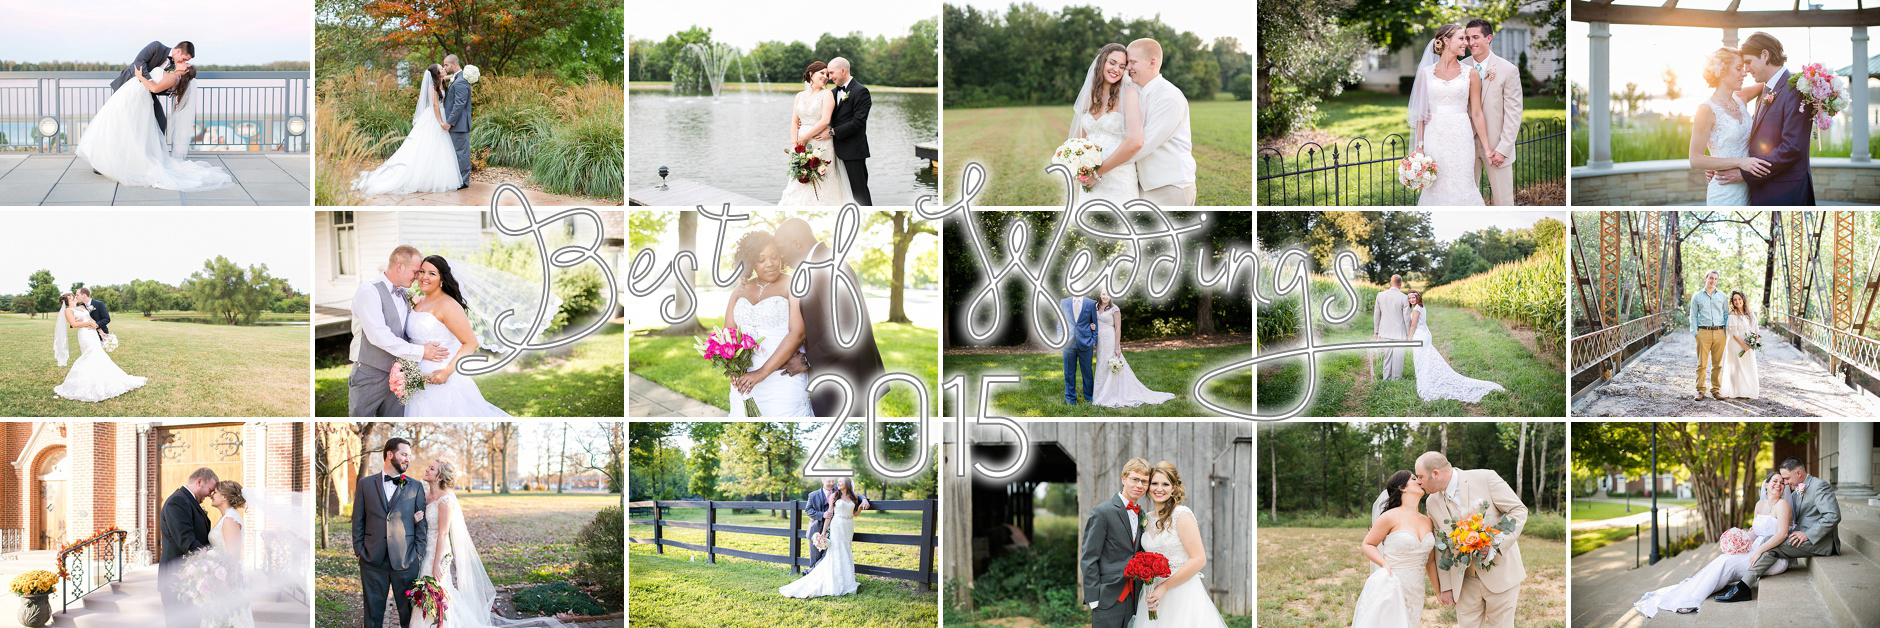 Best-of-Weddings-2015-Rachael-Houser-Photography_0019